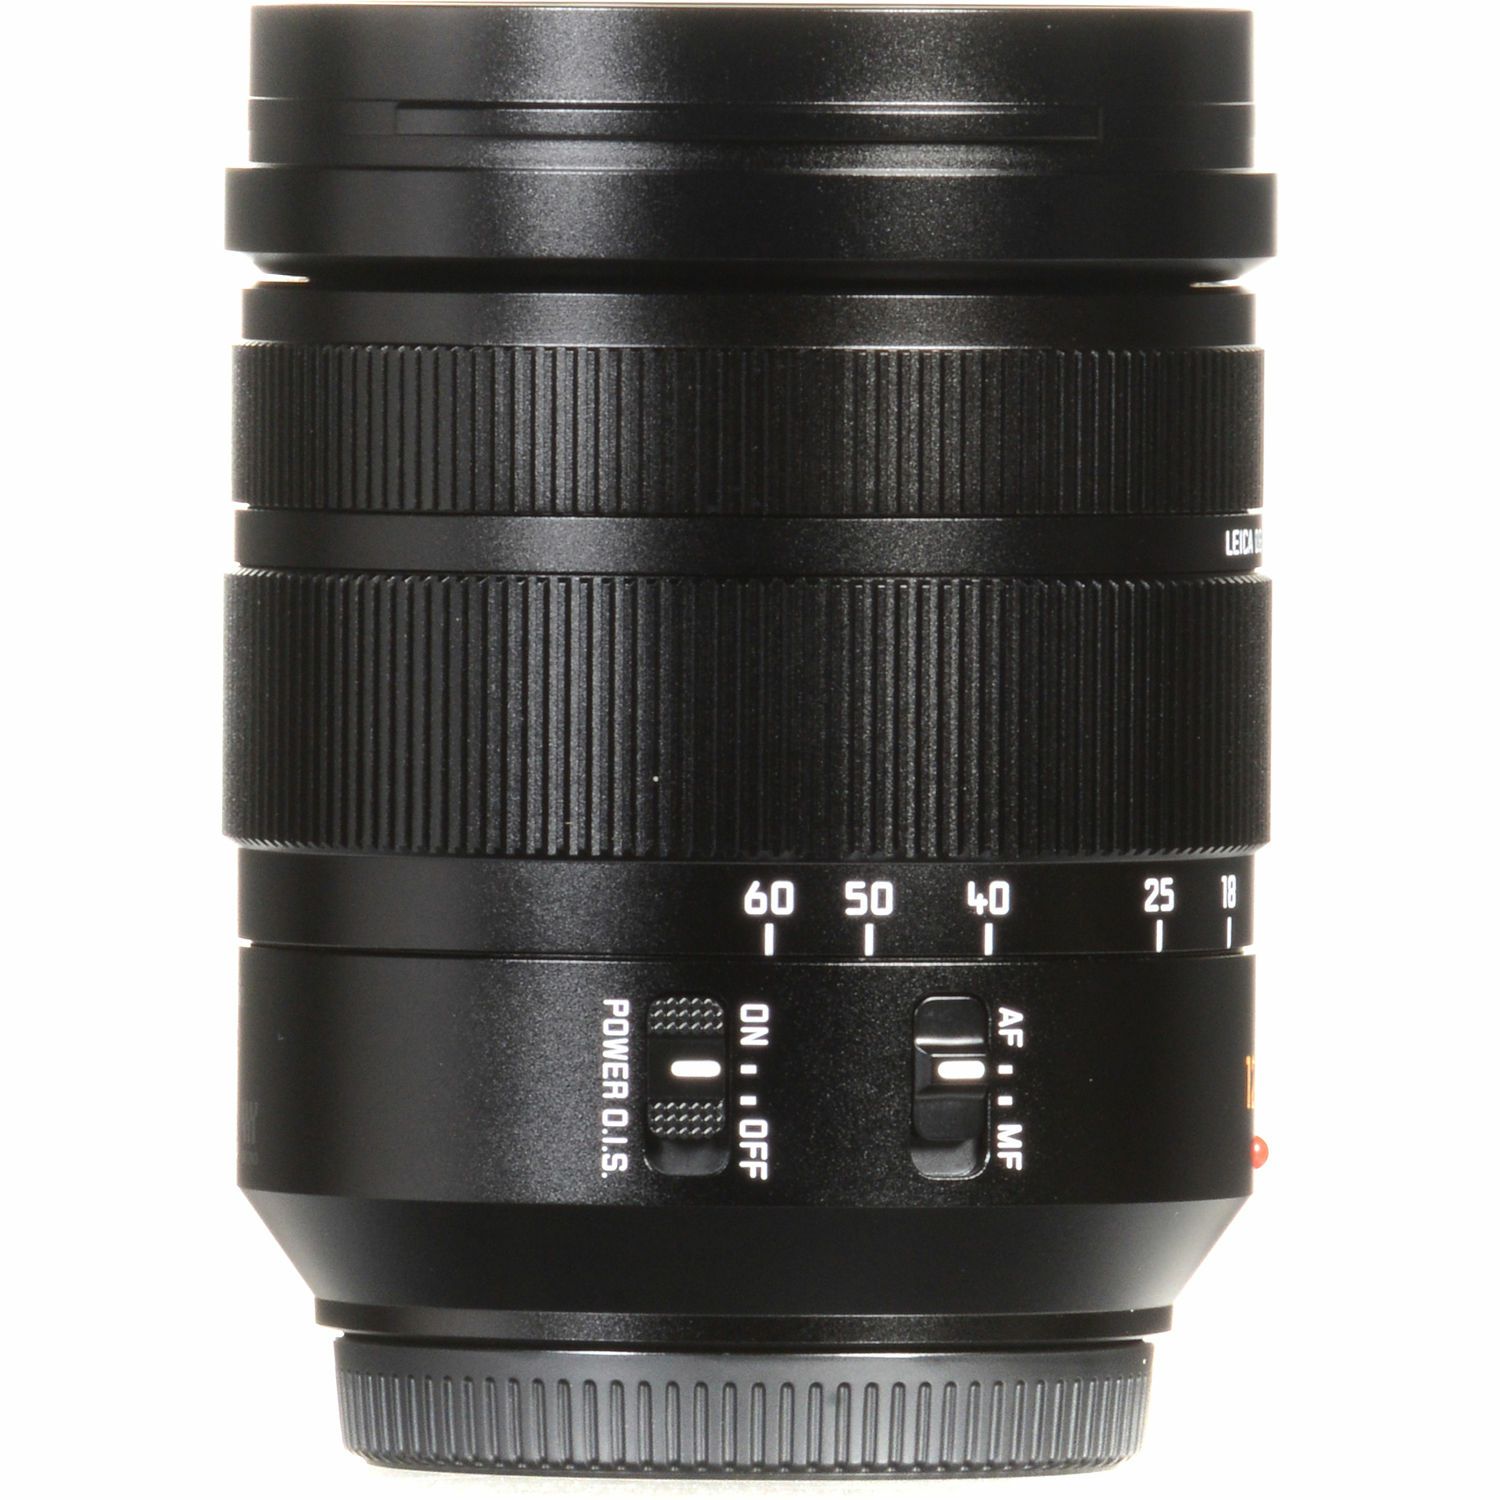 Panasonic 12-60mm f/2.8-4 Asph Power O.I.S. Leica DG Vario-Elmarit standardni objektiv za Micro Four Thirds MFT micro4/3" (H-ES12060E)